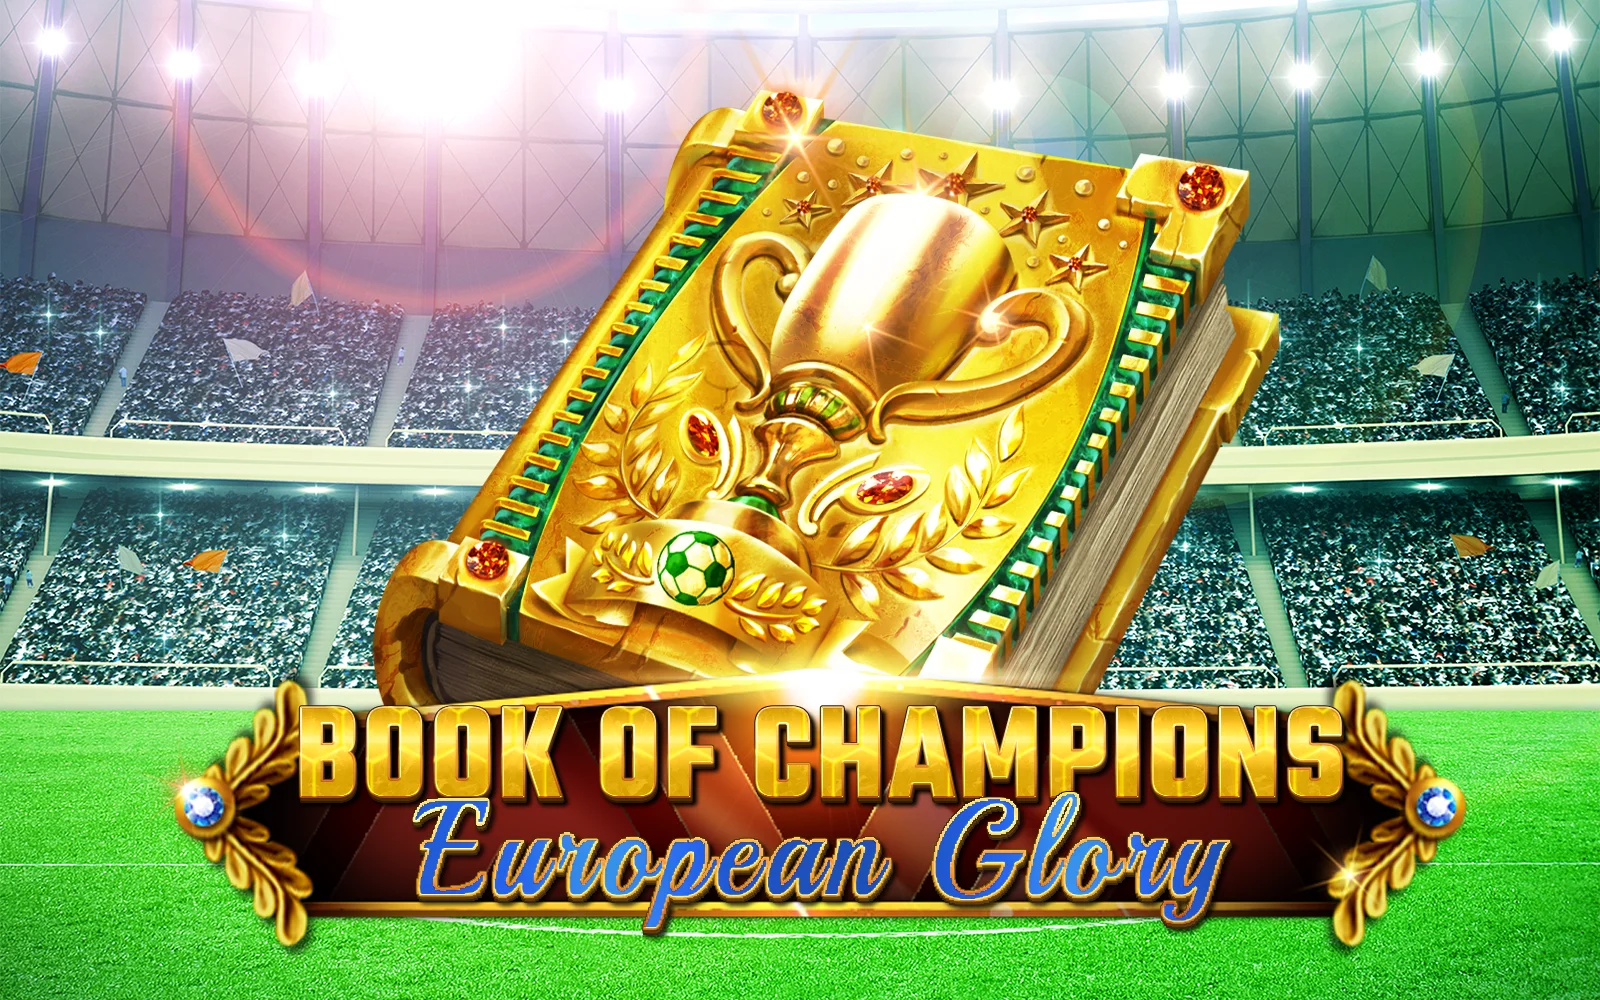 Gioca a Book Of Champions - European Glory sul casino online Starcasino.be